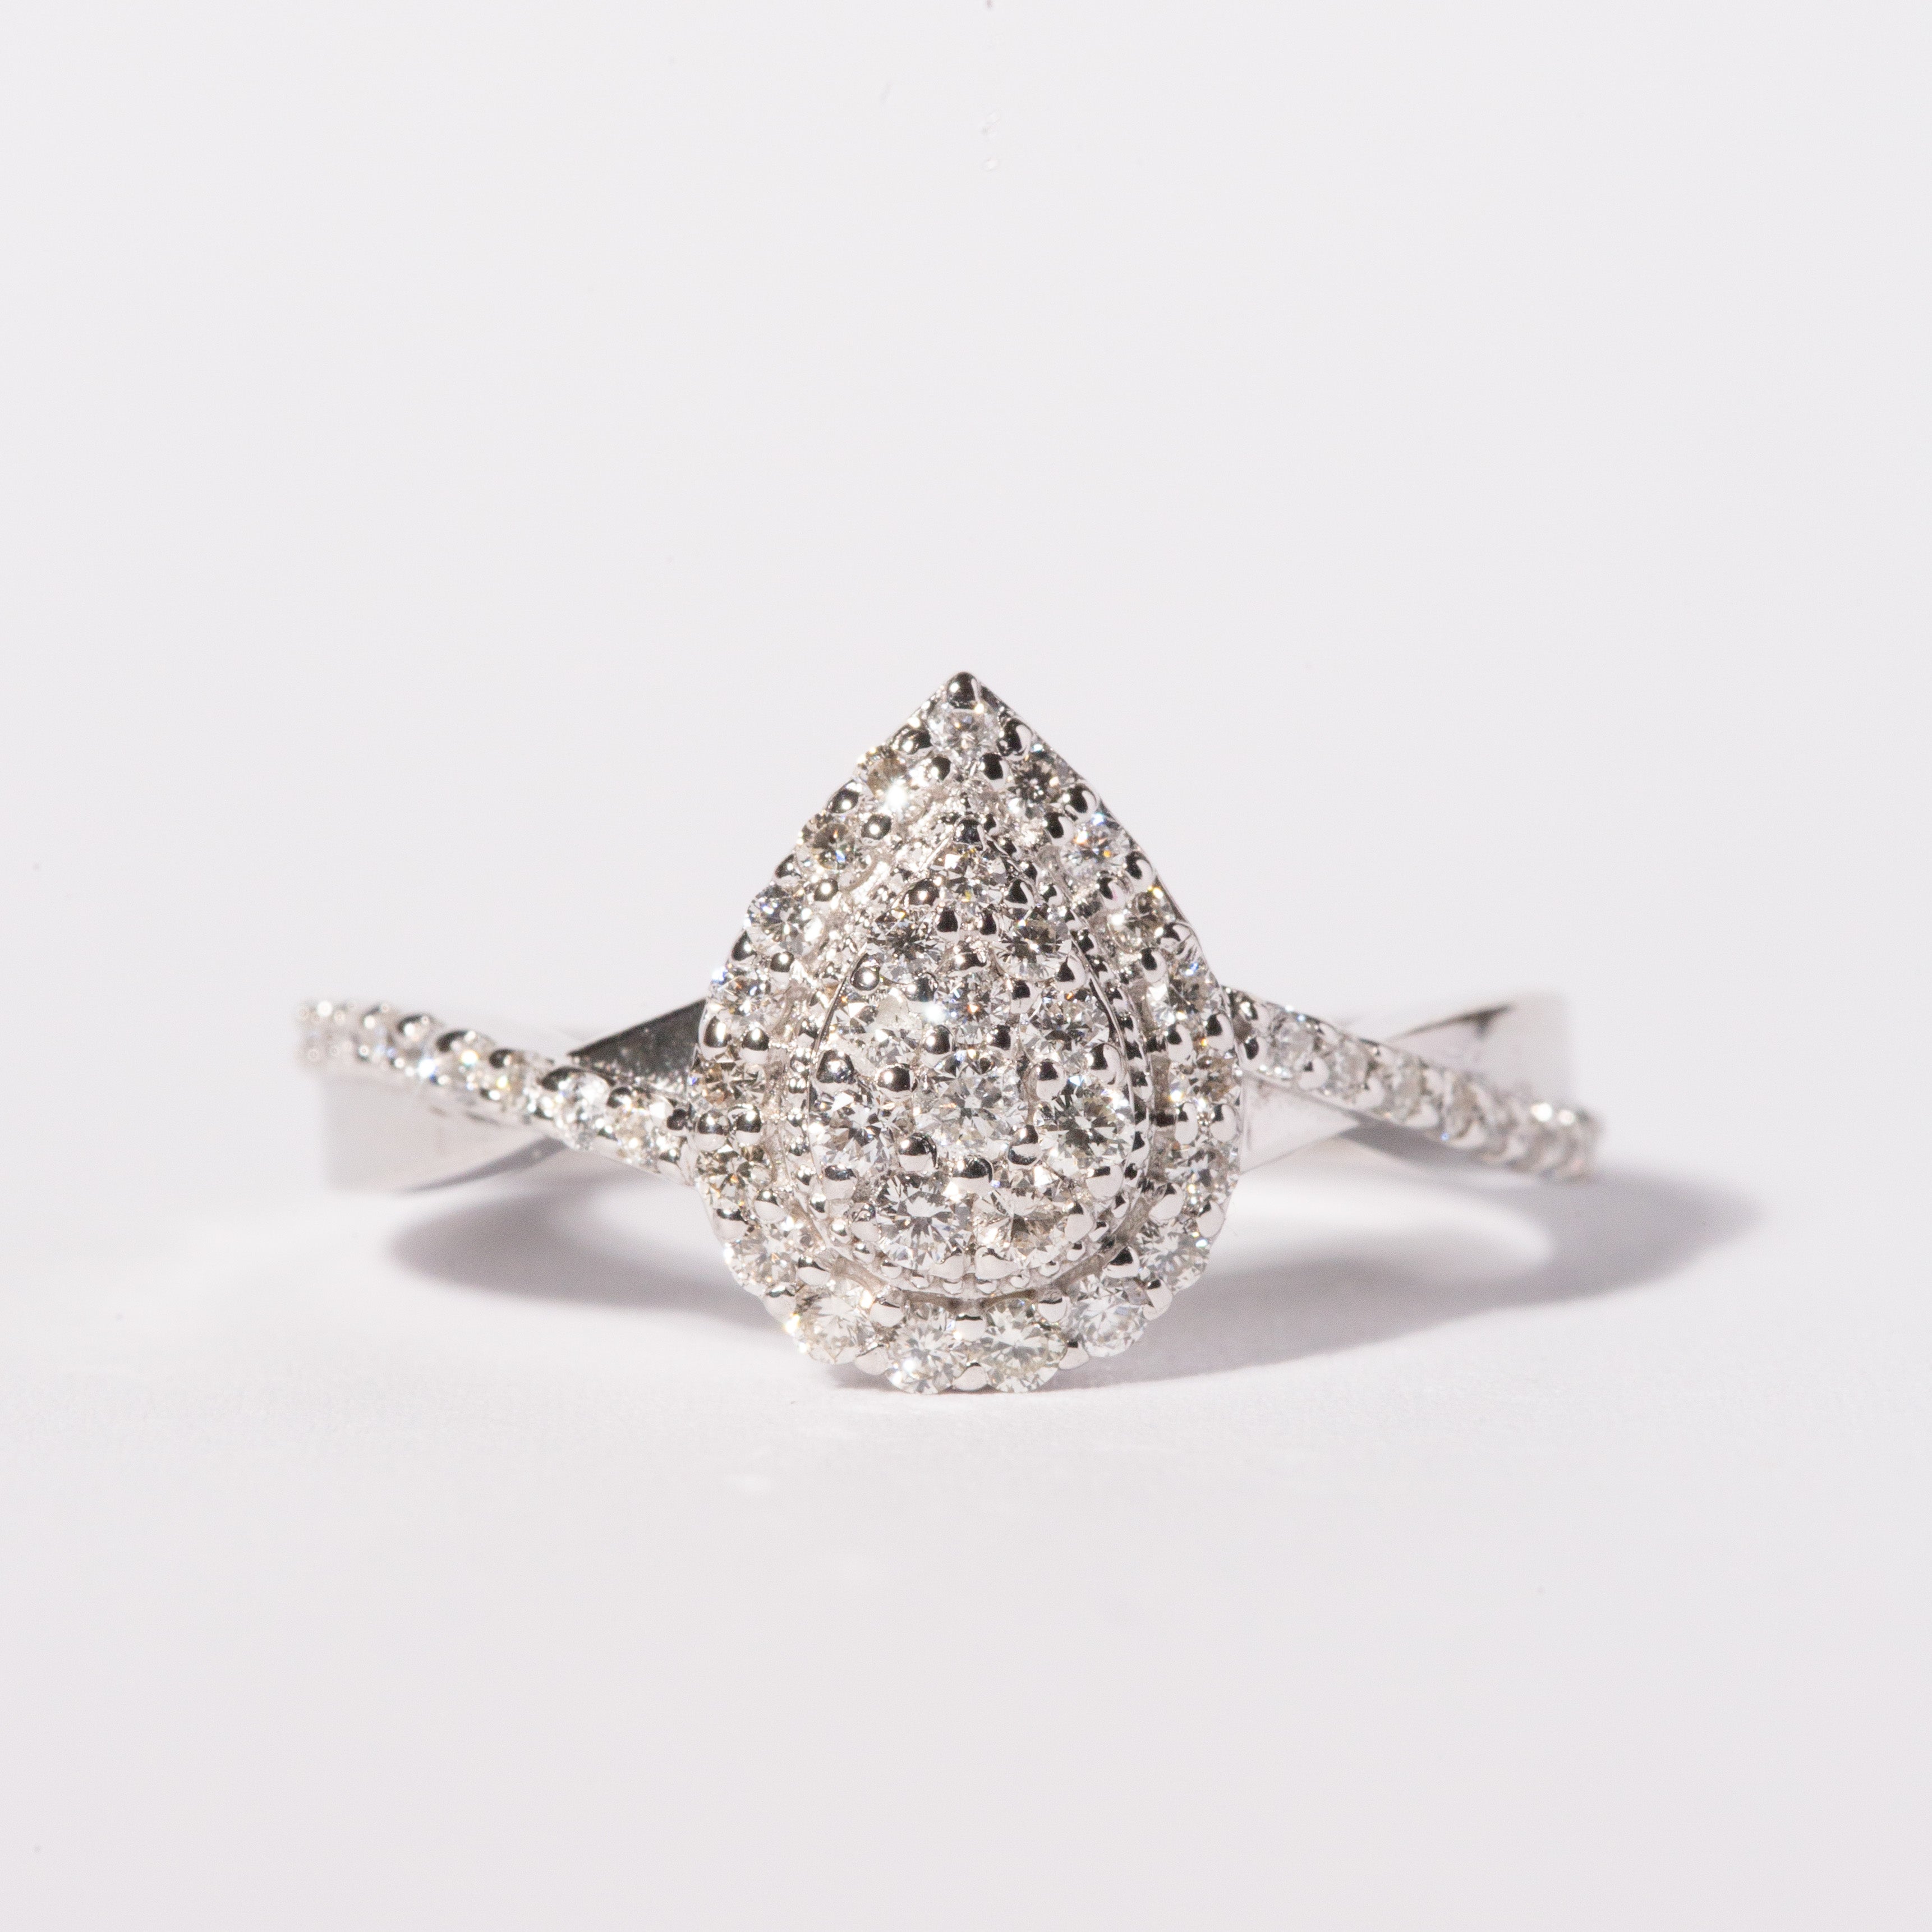 9ct White Gold Ladies Diamond Cluster Engagement Ring - 1102757